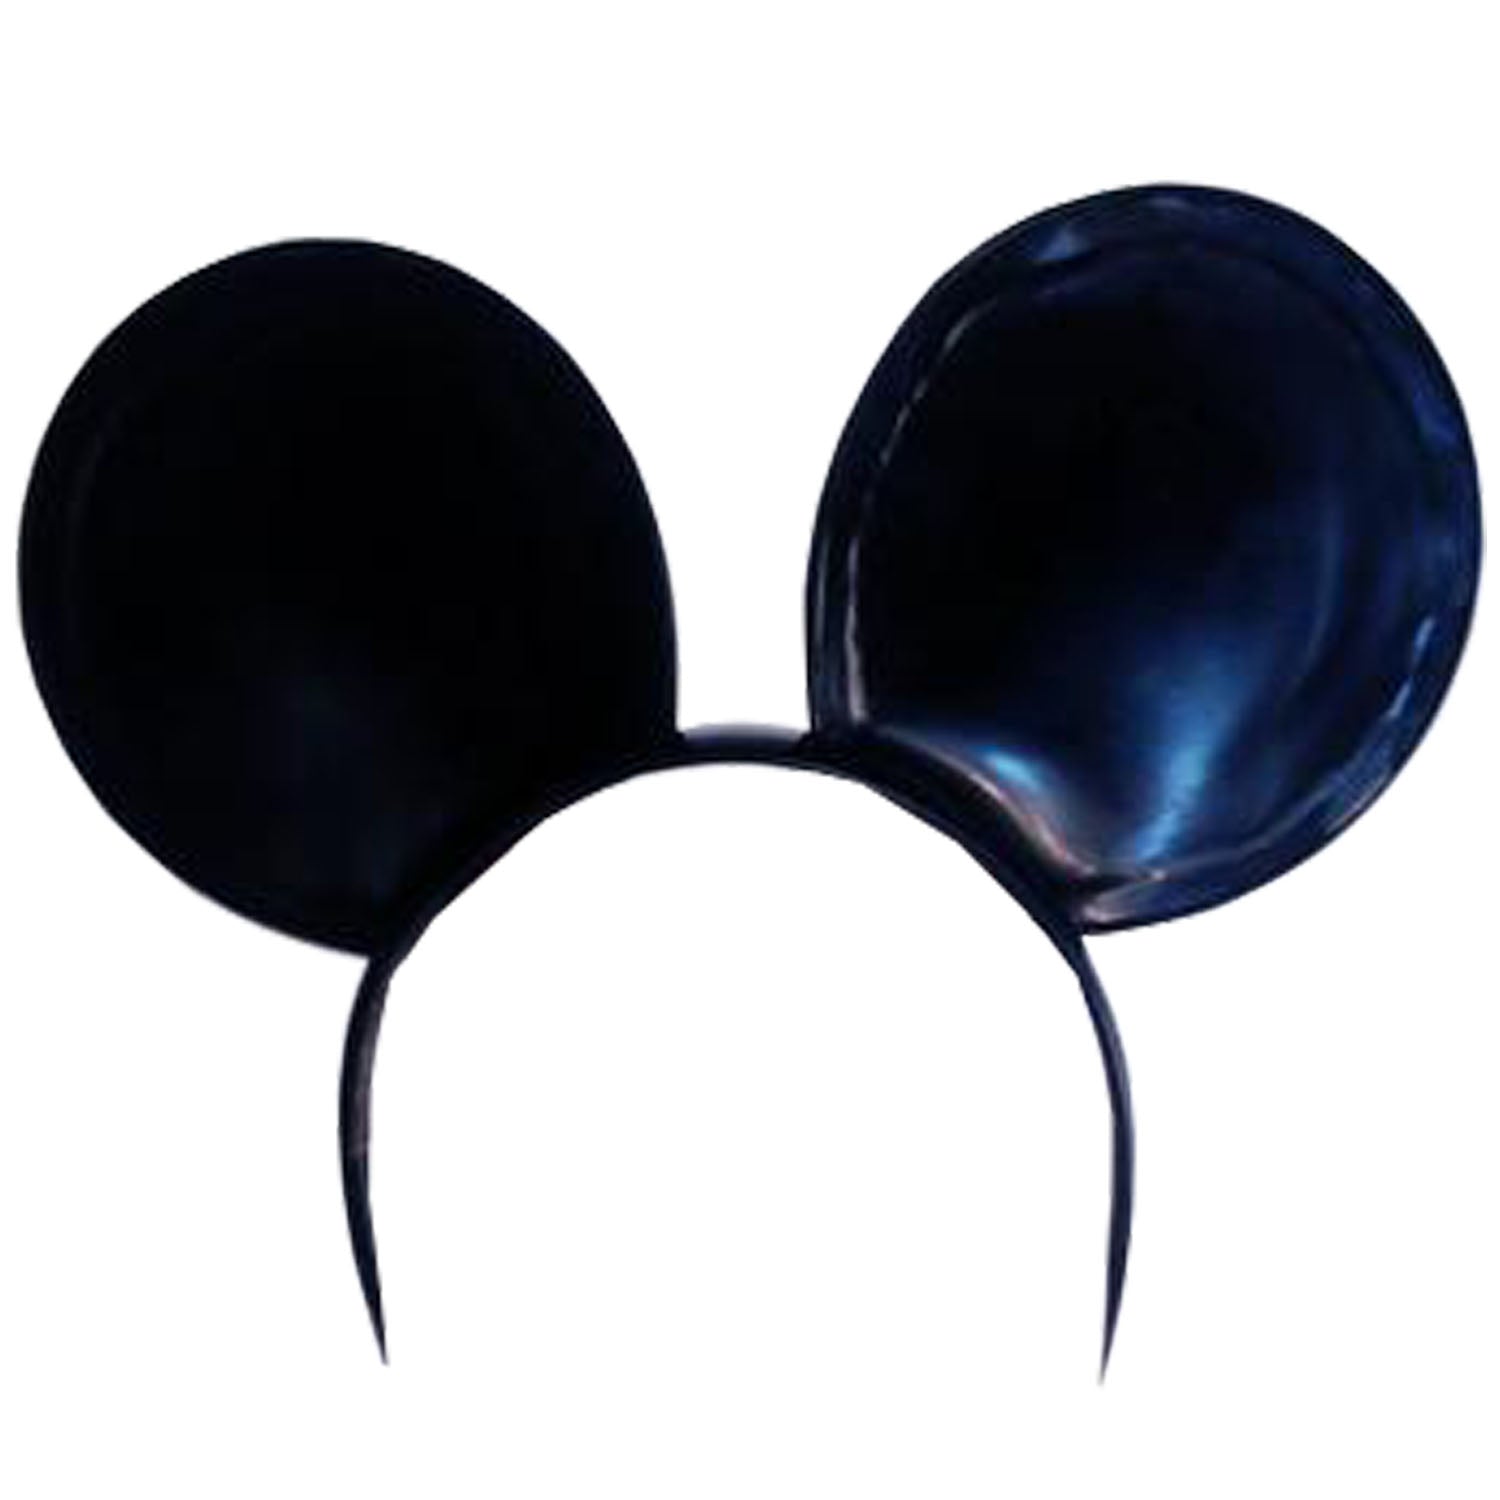 Dress Up America Mouse Ears - Black